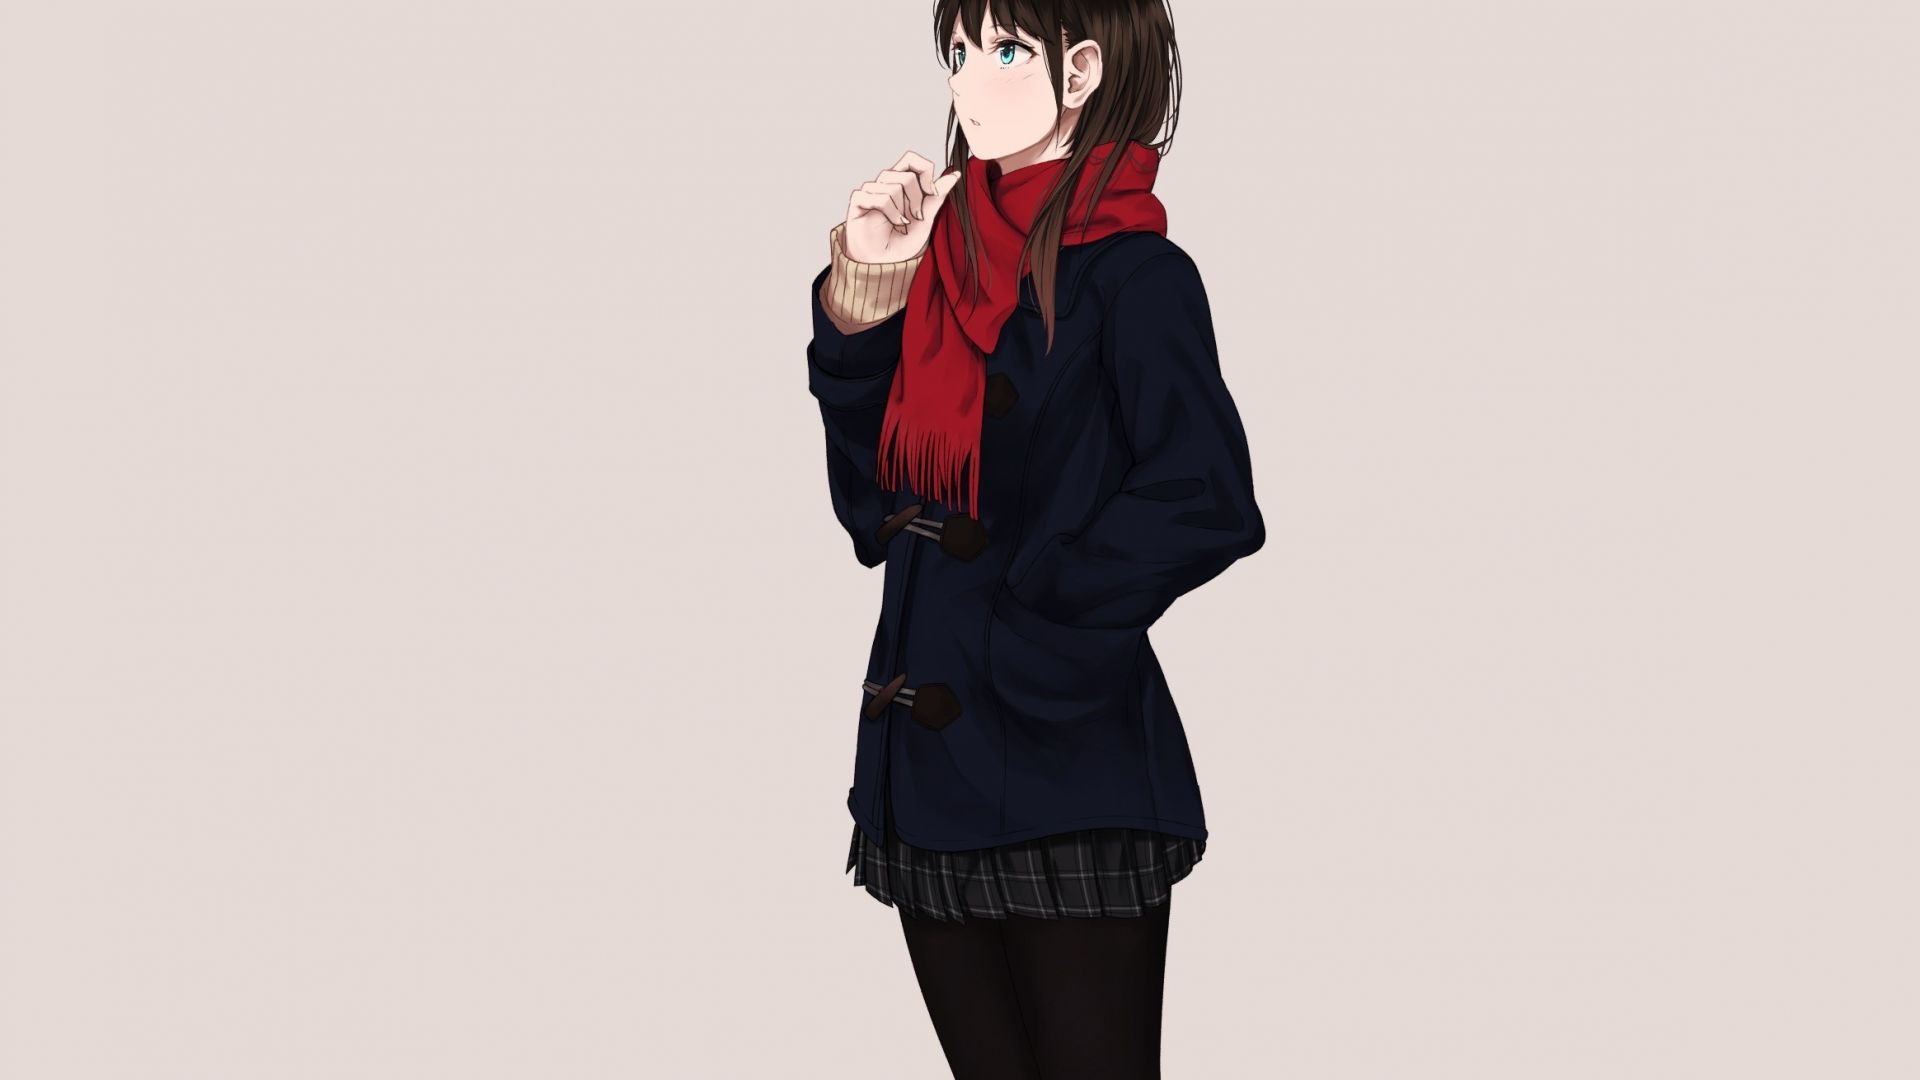 Wallpaper Minimal, cute anime girl, red scarf